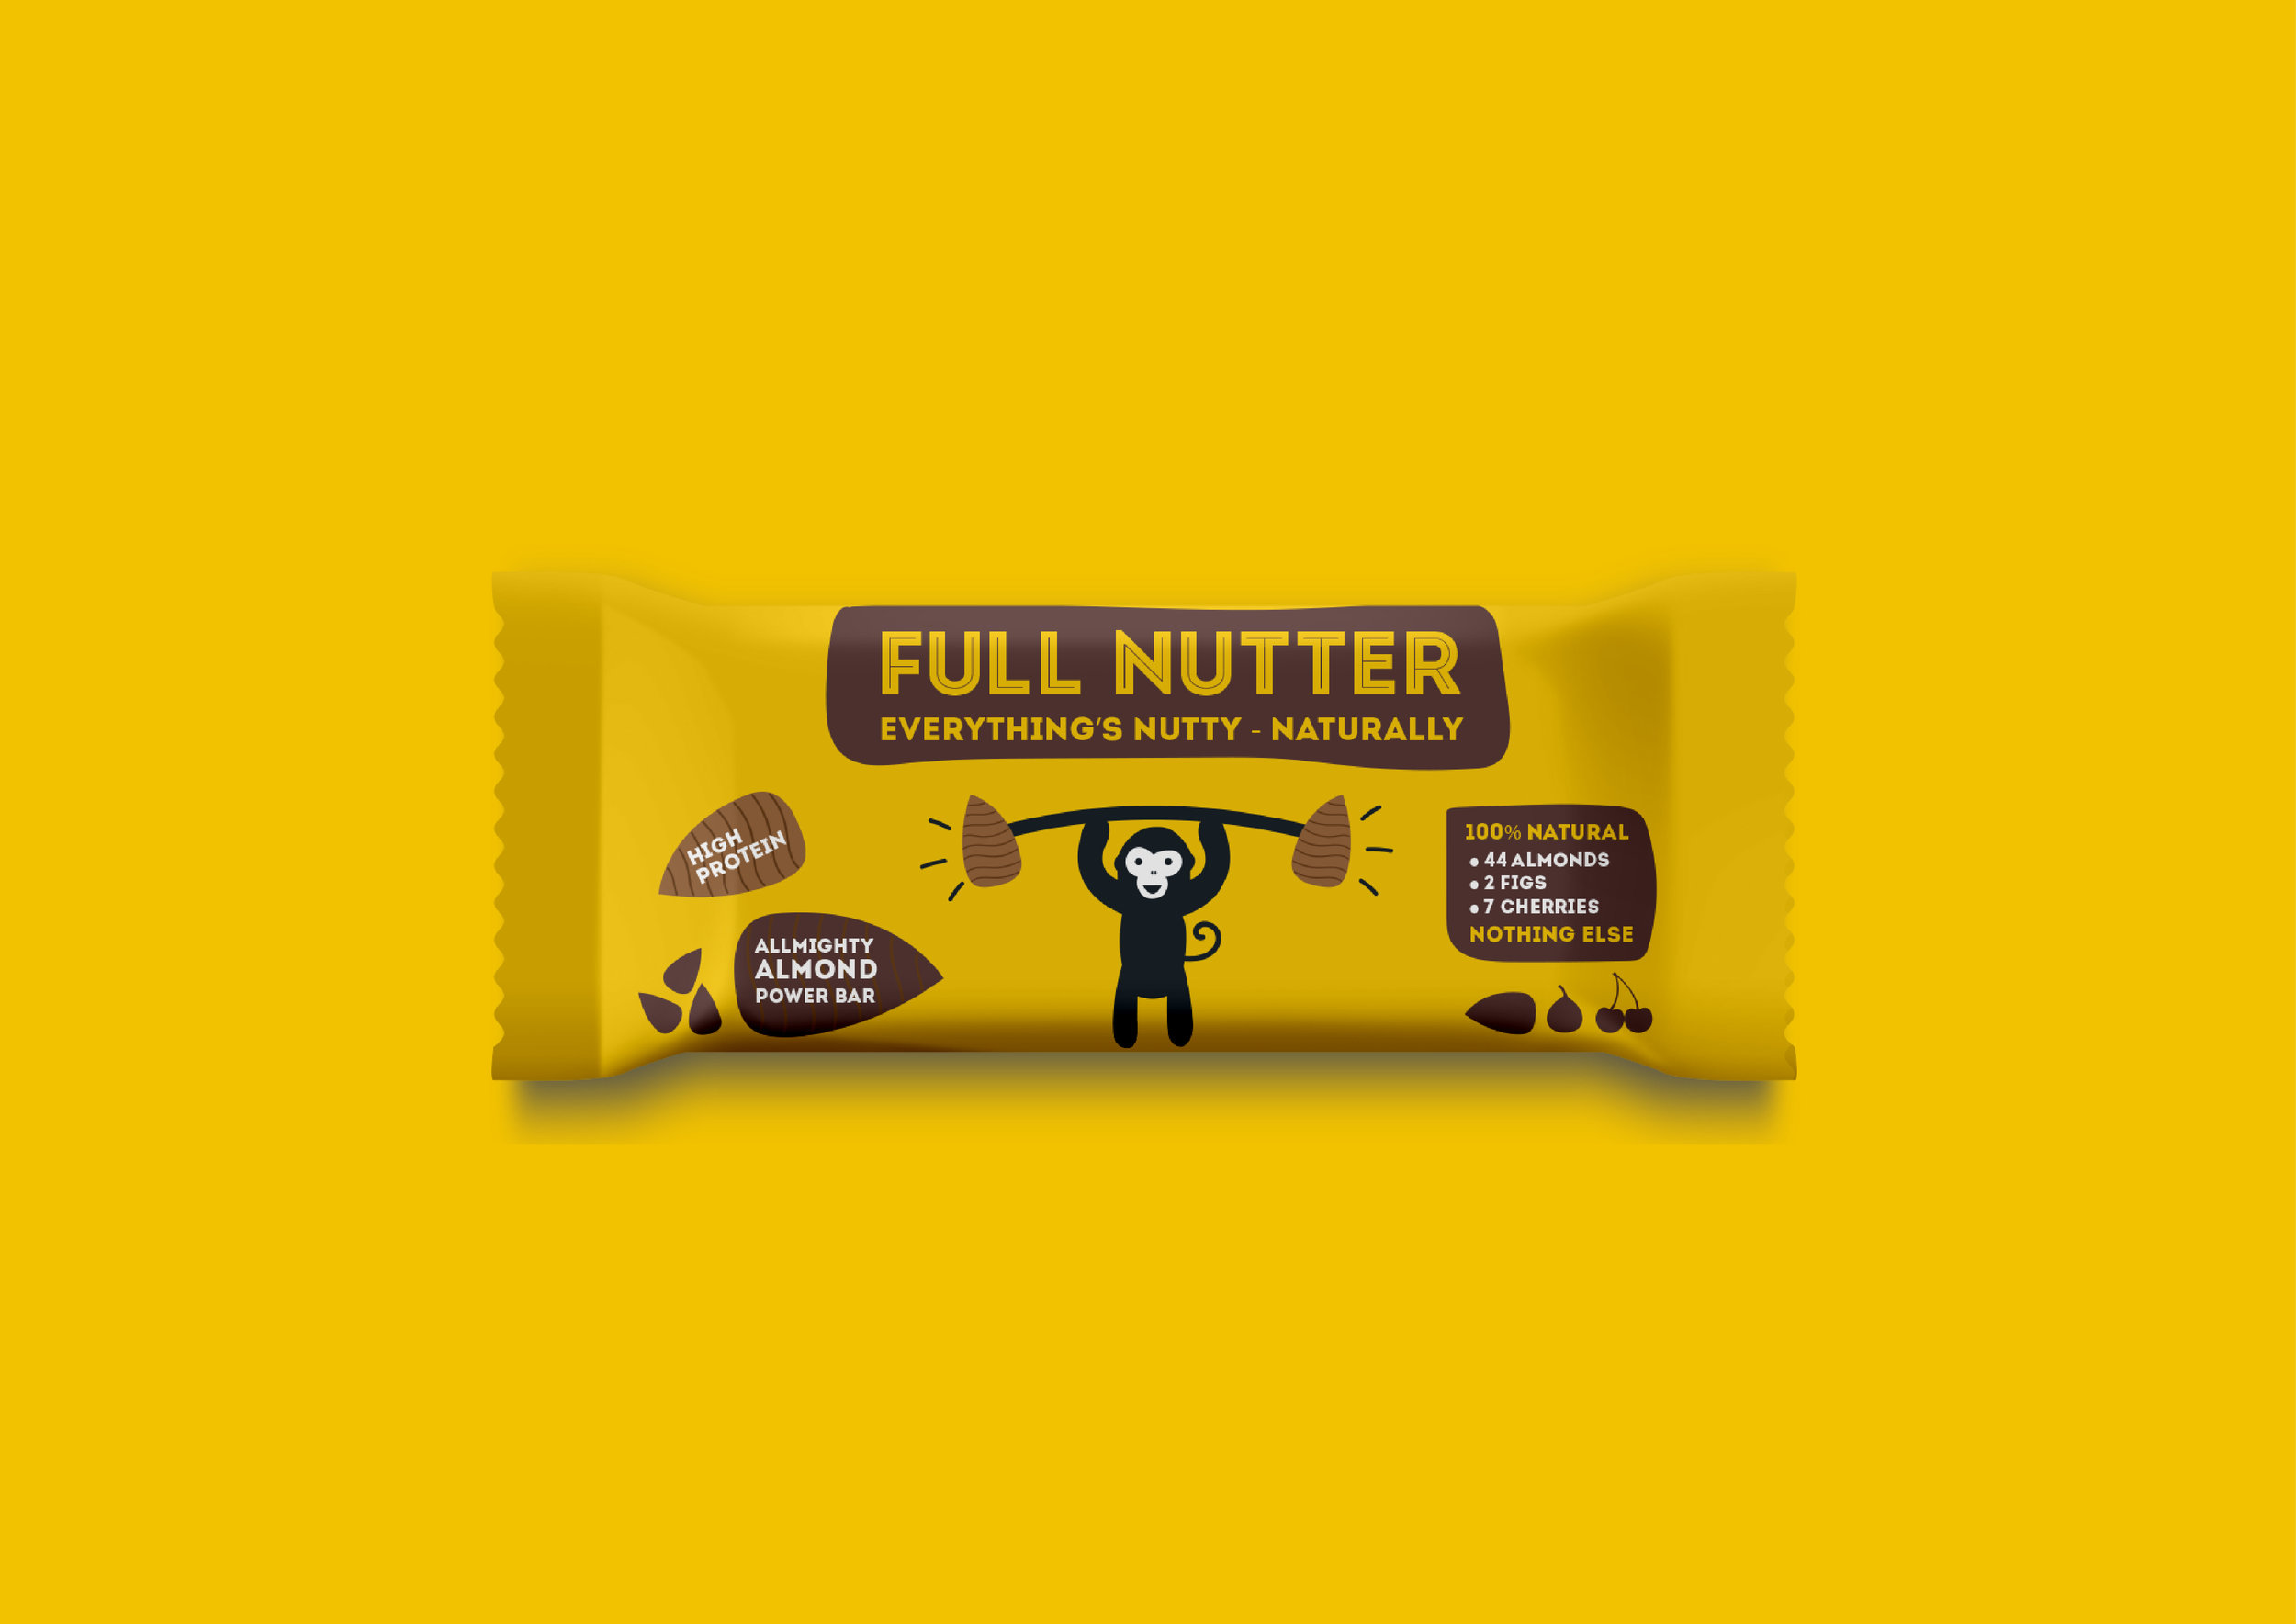 Freelance-graphic-designer-Packaging design of a yellow Full Nutter energy bar